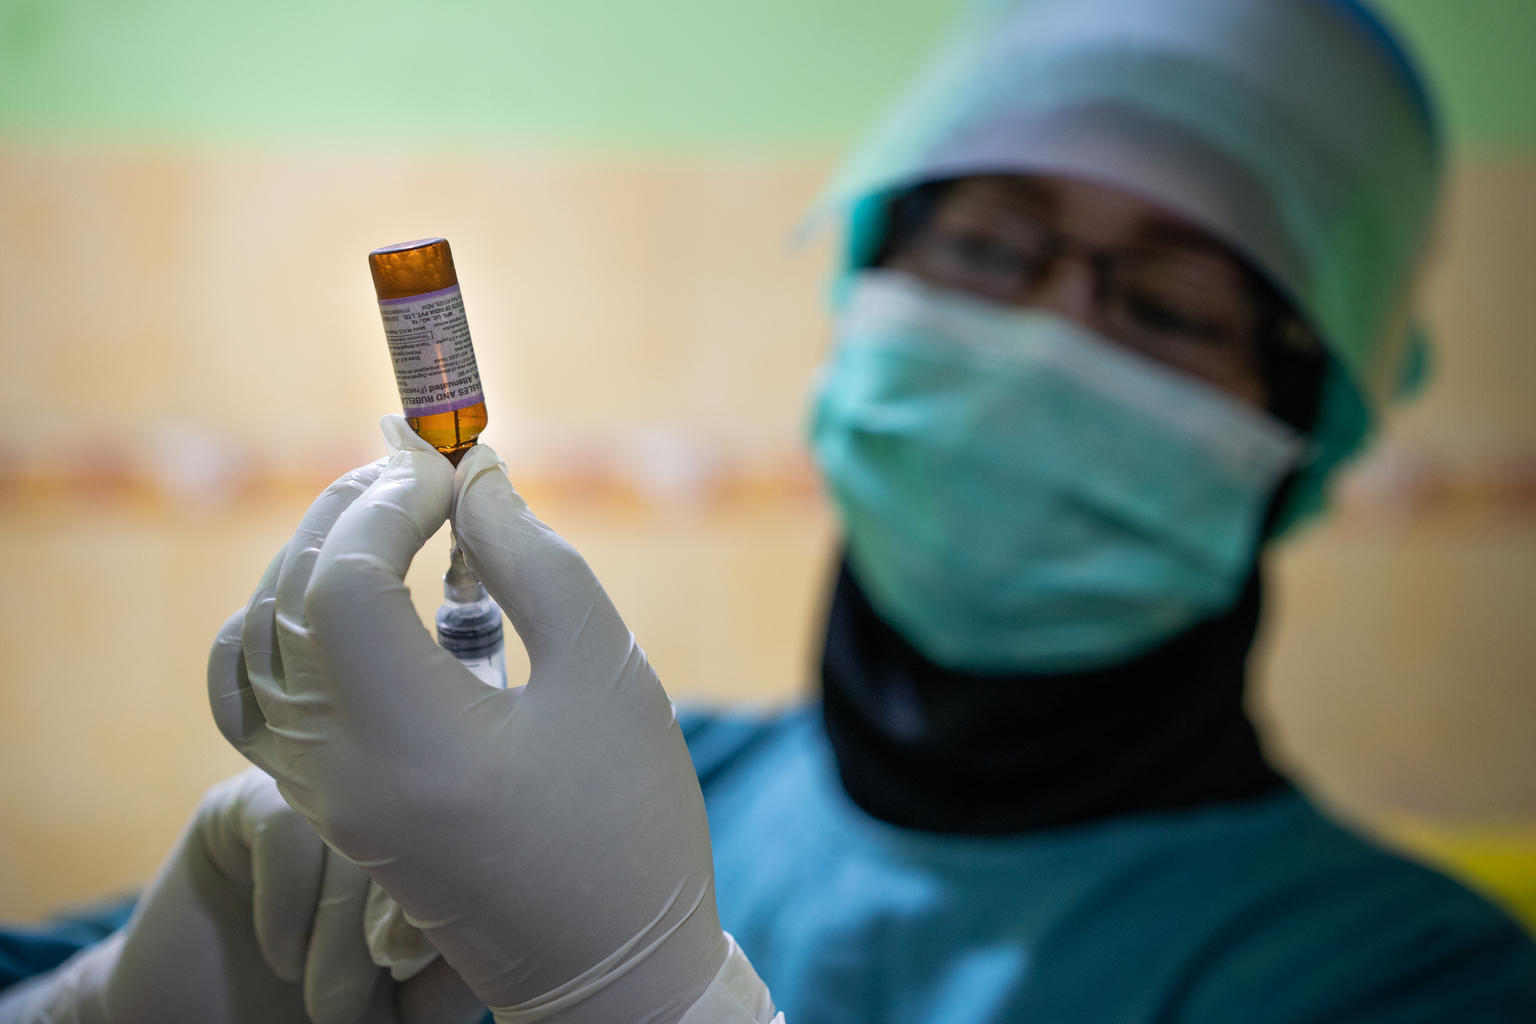 On 16 June 2020, a nurse prepares a syringe for vaccination at the Tegalrejo Community Health Centre in Yogyakarta, Indonesia.